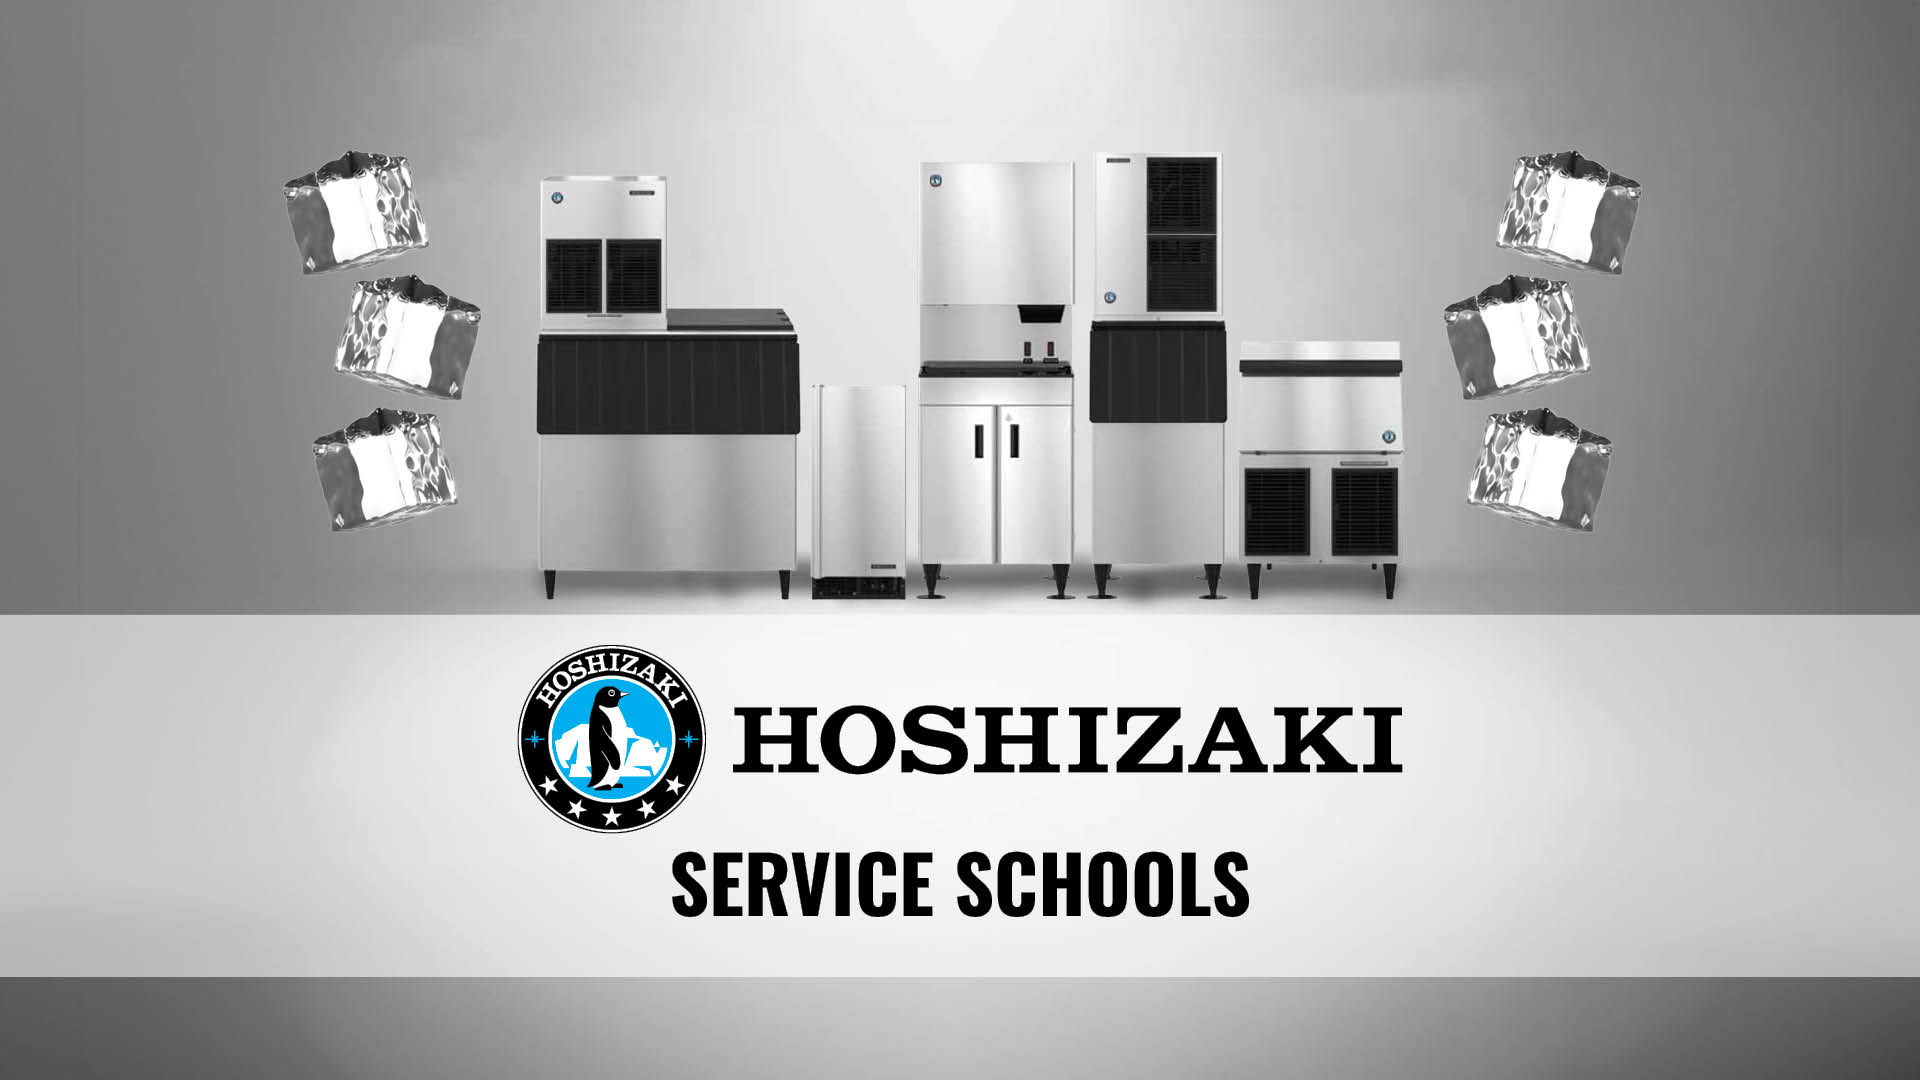 Hoshizaki Service Schools in North Calgary